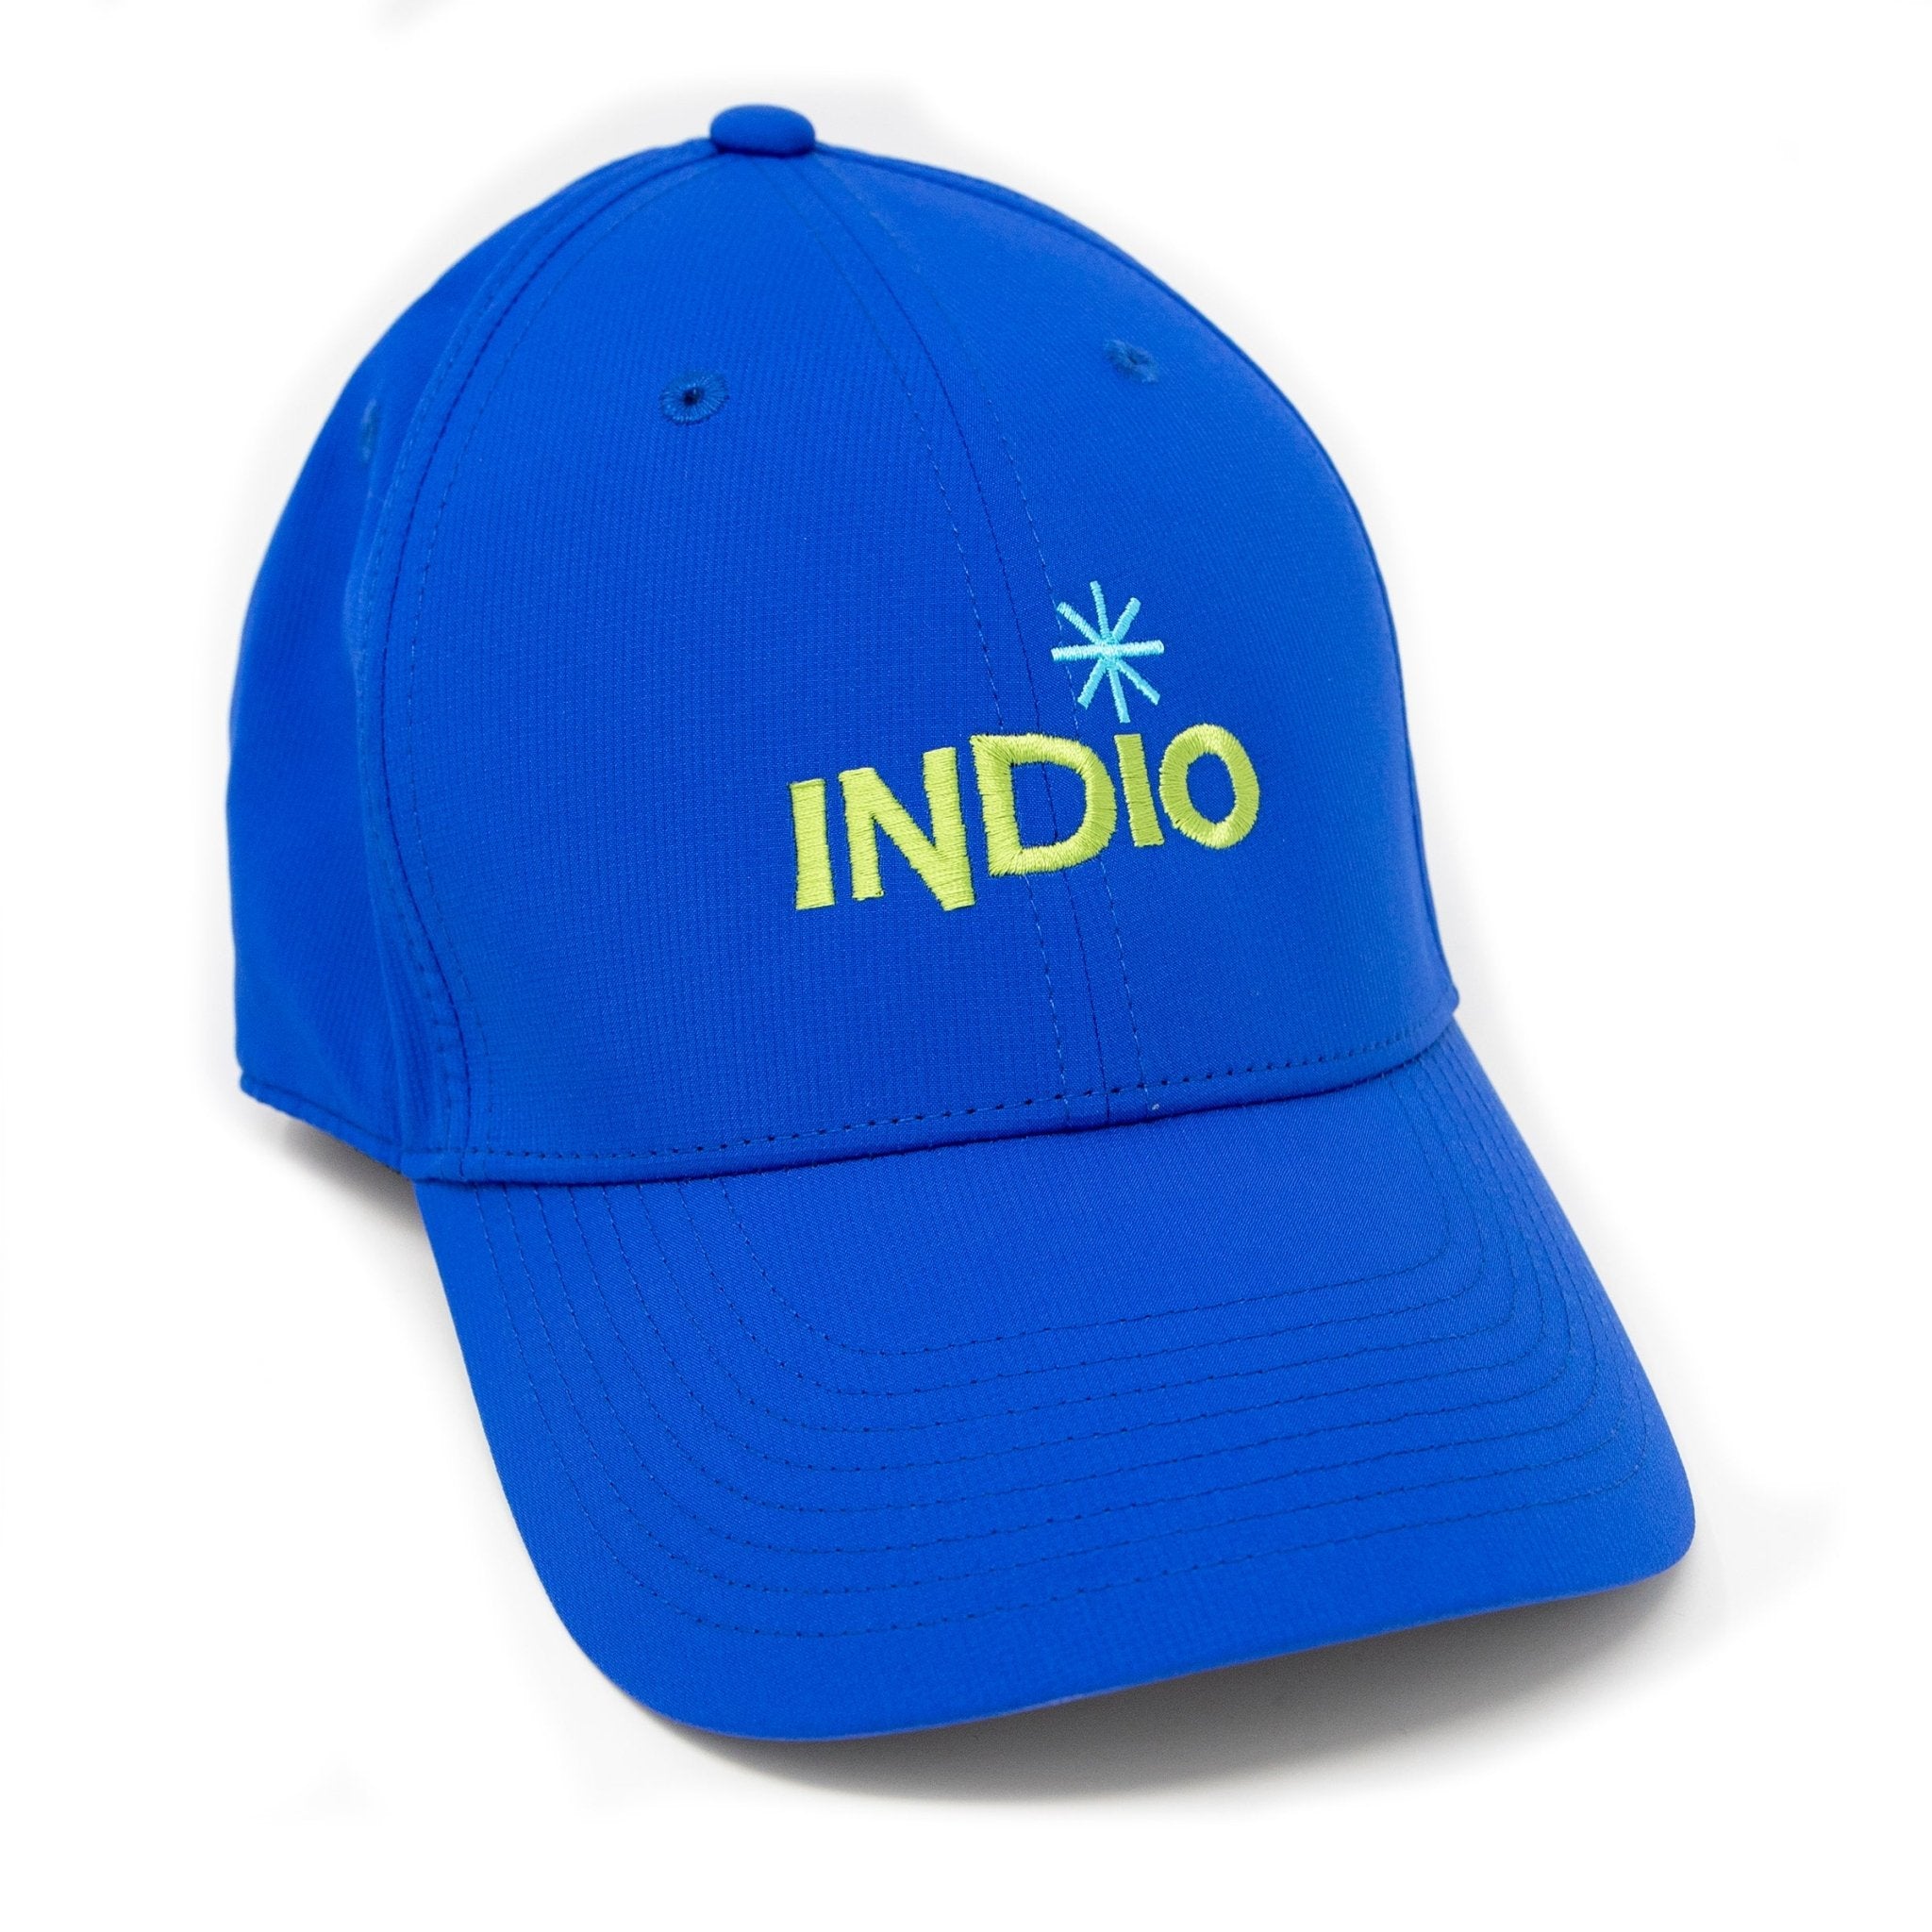 Indio Nike Baseball Golf Cap - Destination PSP